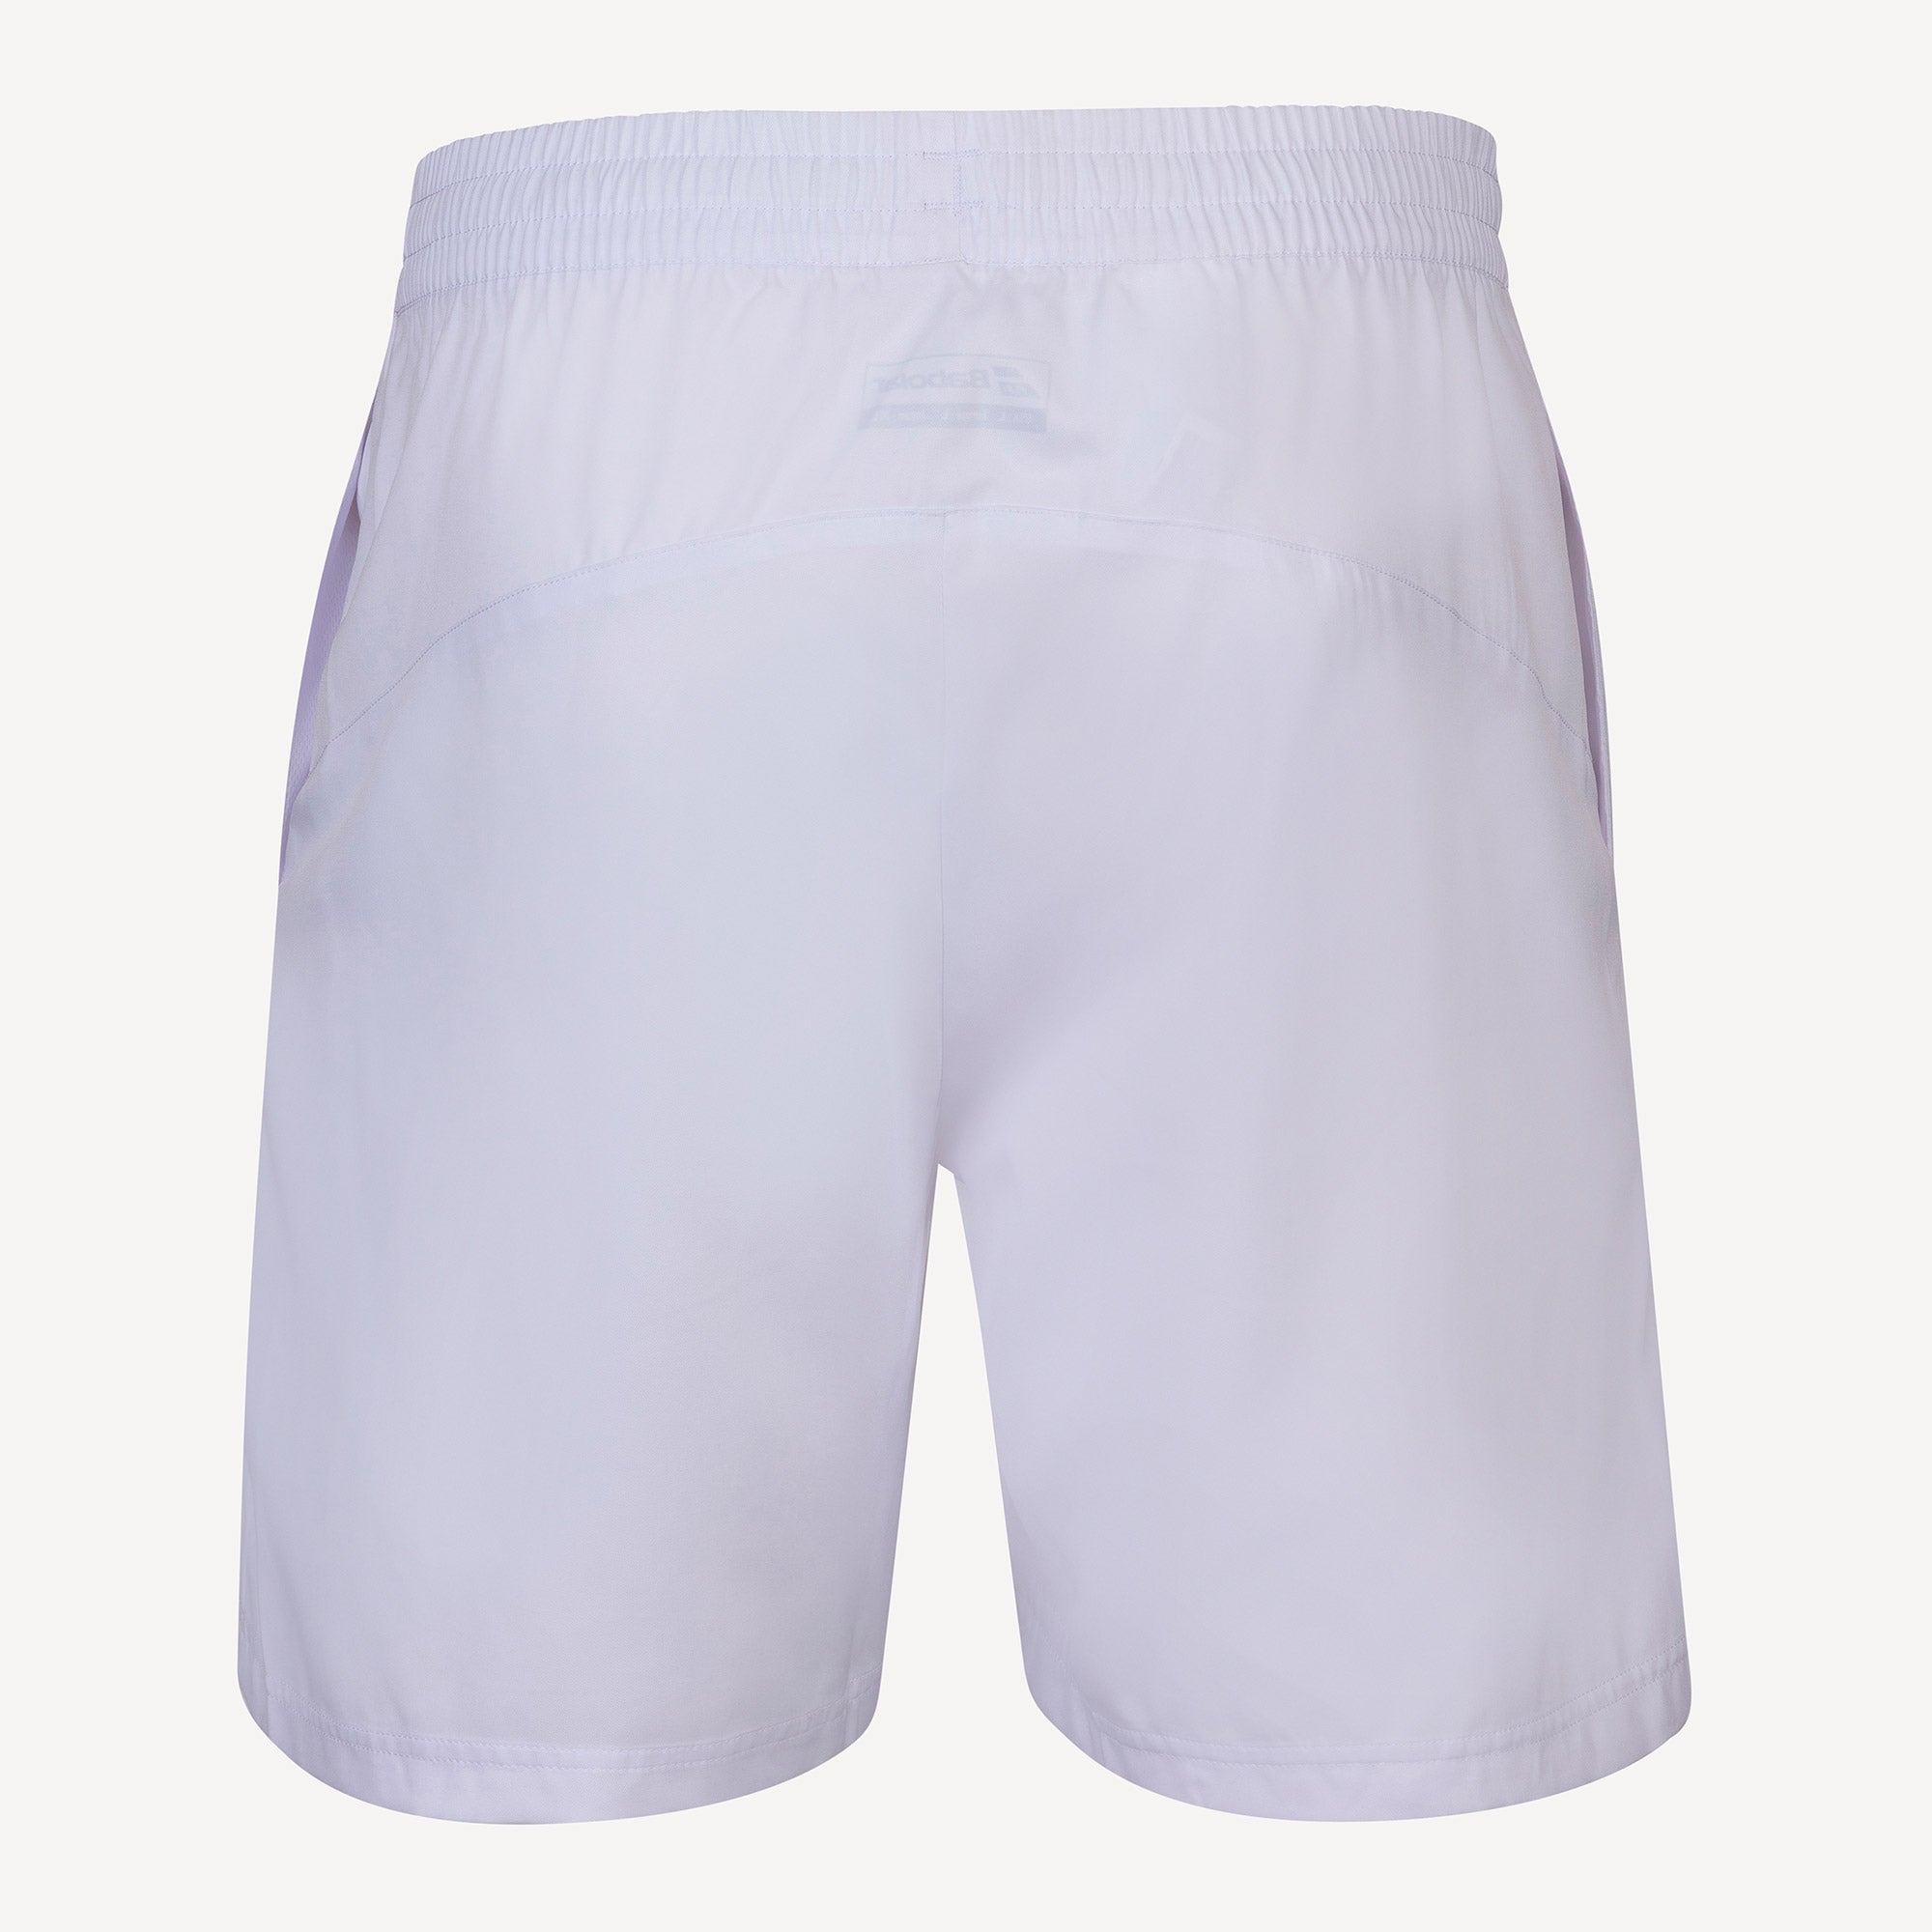 Babolat Play Club Boys' Tennis Shorts White (2)